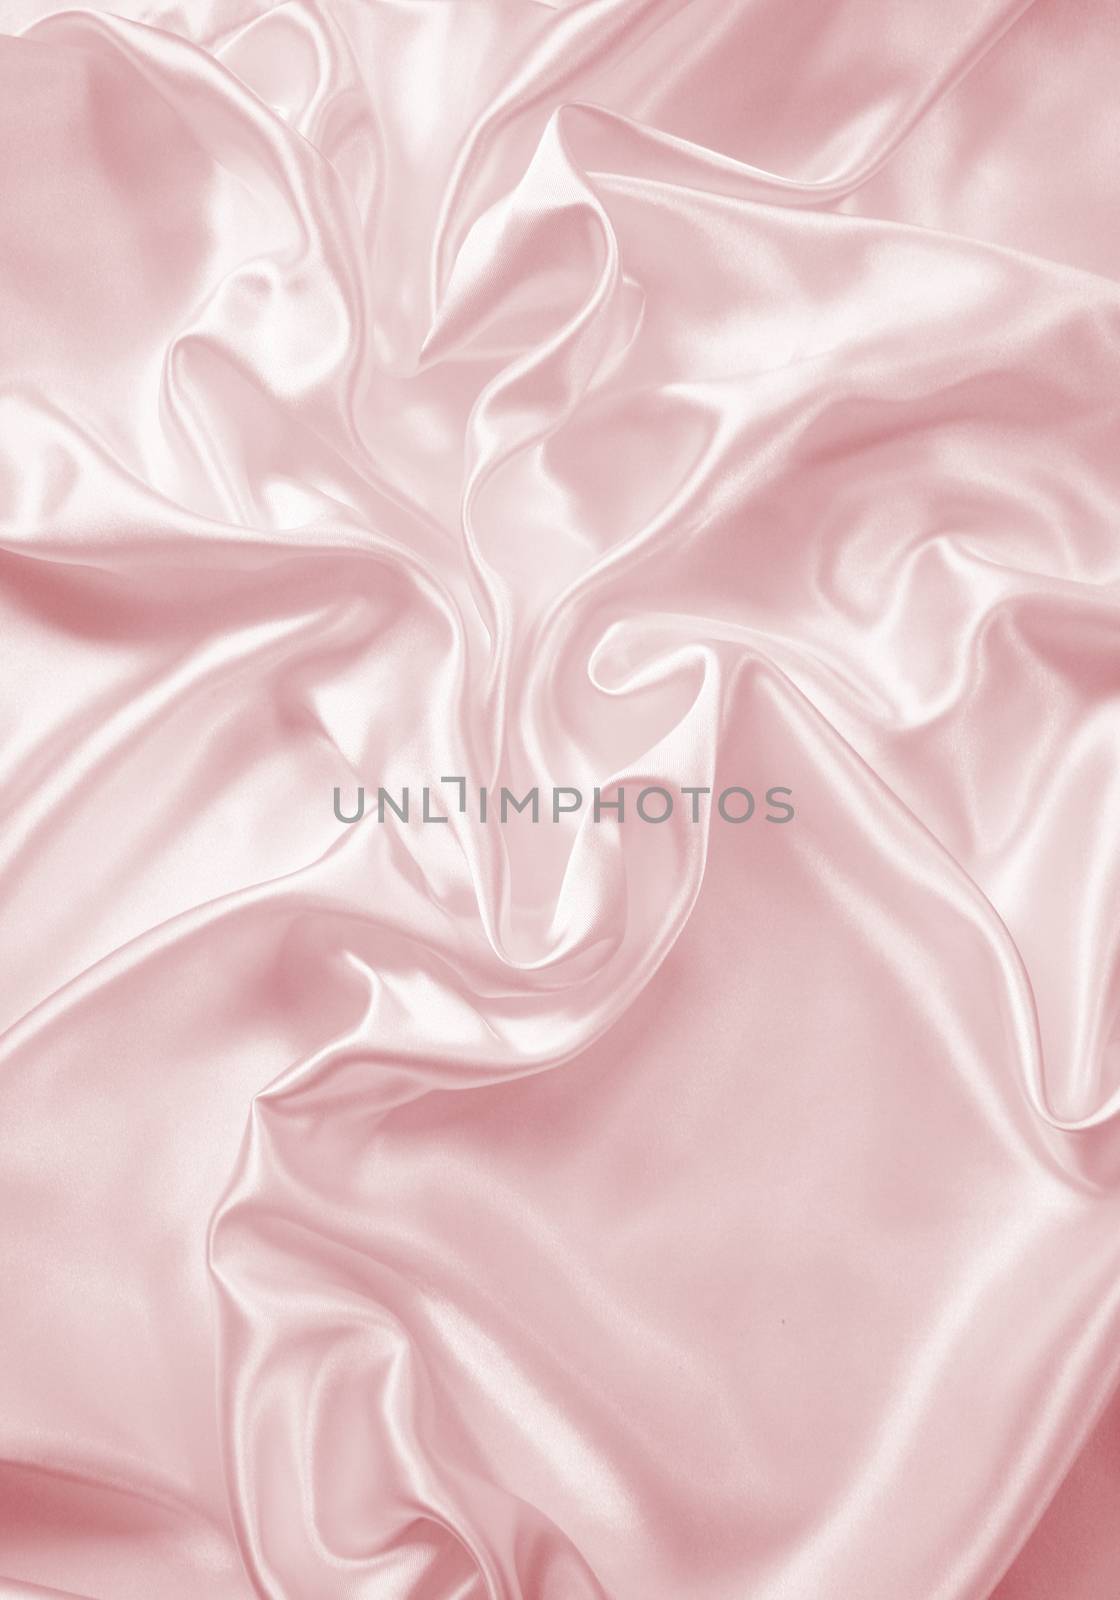 Smooth elegant pink silk can use as wedding background